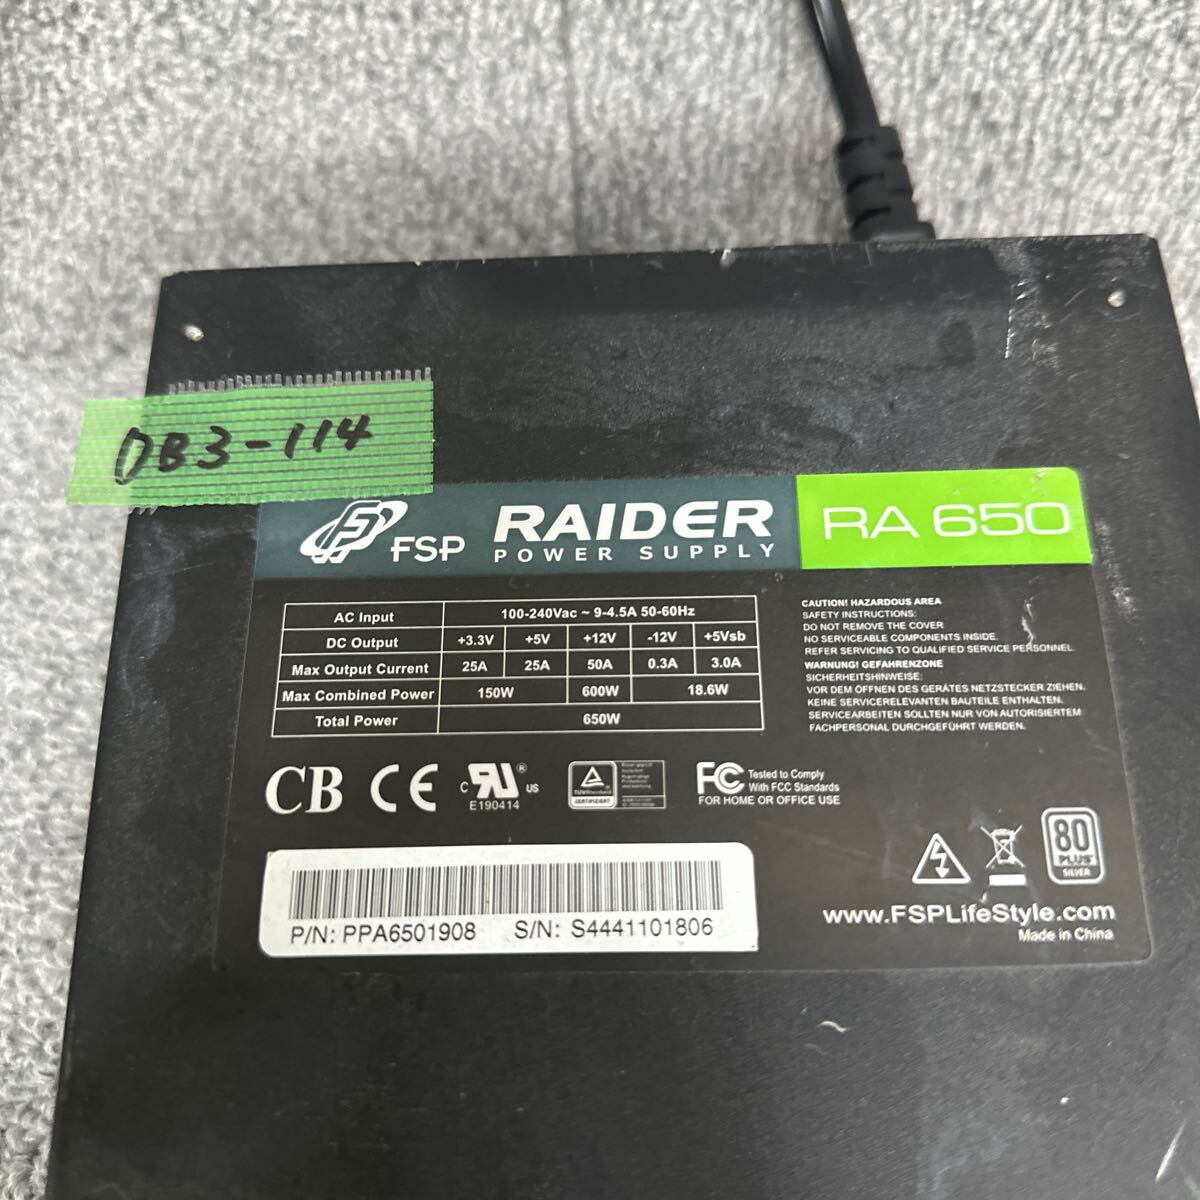 DB3-114 激安 PC 電源BOX FSP RAIDER RA650 650W 80PLUS SILVER 電源ユニット 電源テスターにて電圧確認済み 中古品の画像2